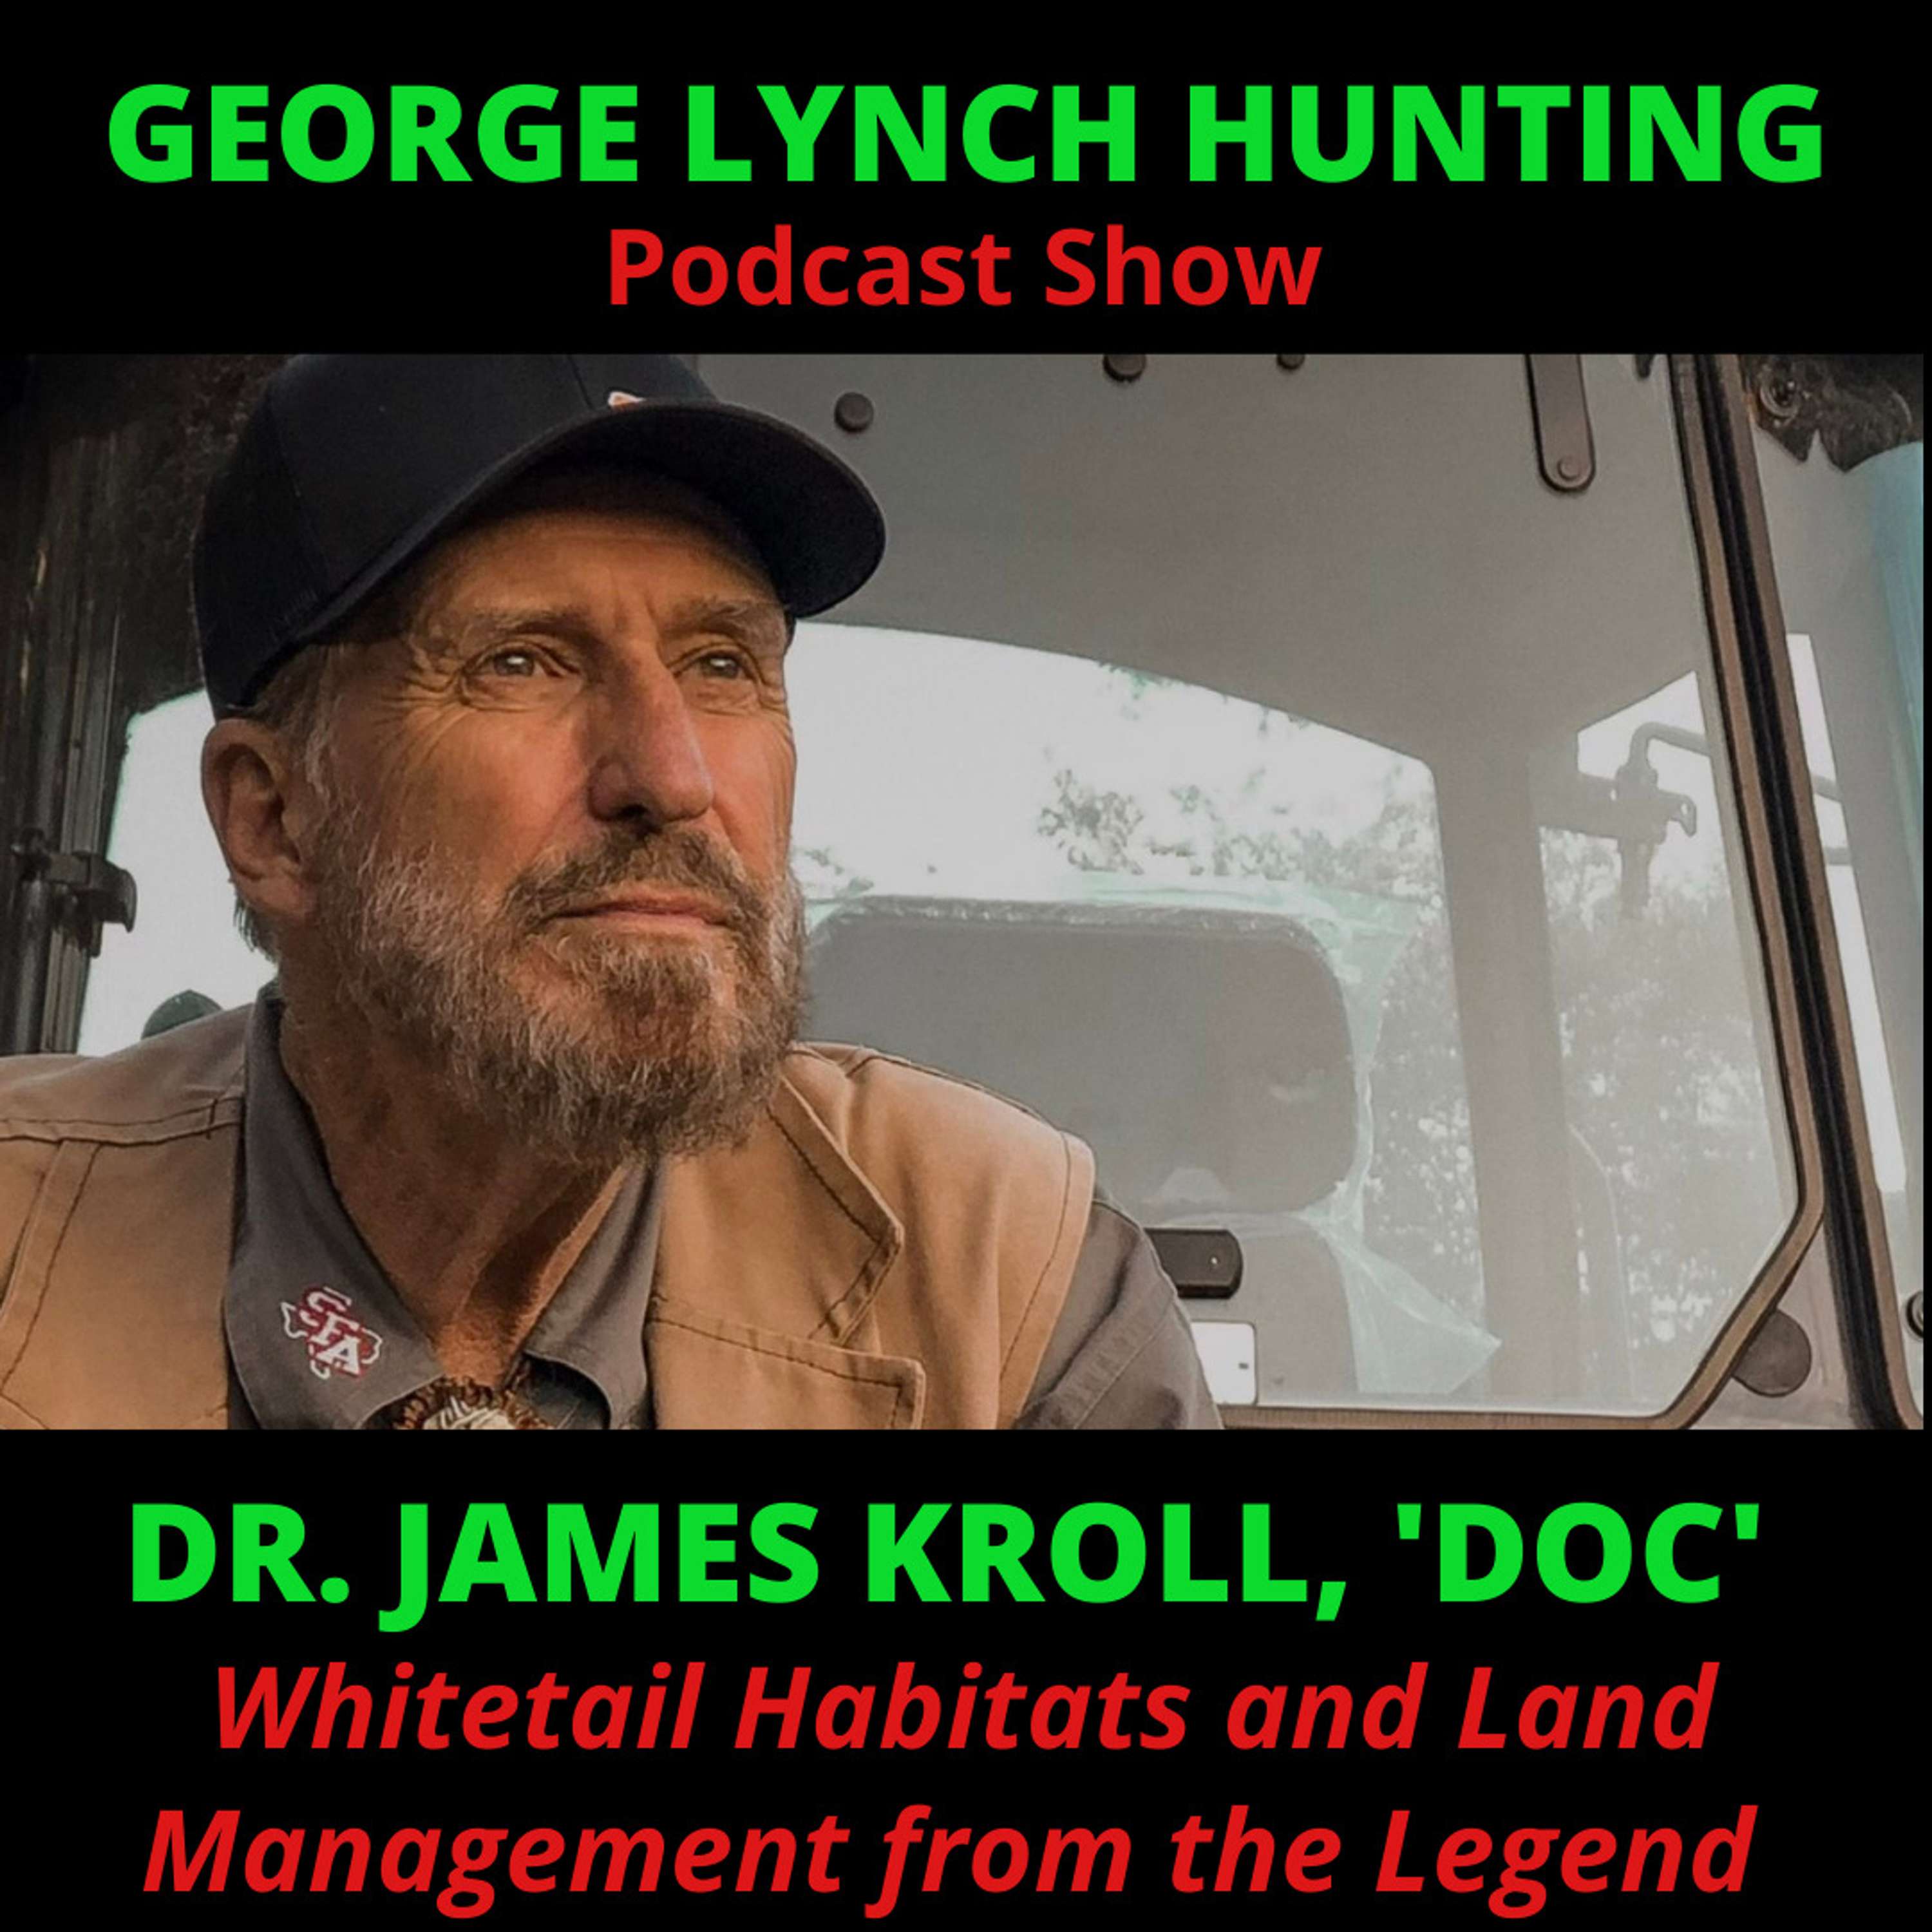 DR. JAMES KROLL, 'DR. DEER' - WHITETAIL HABITATS AND LAND MANAGEMENT FROM A LEGEND